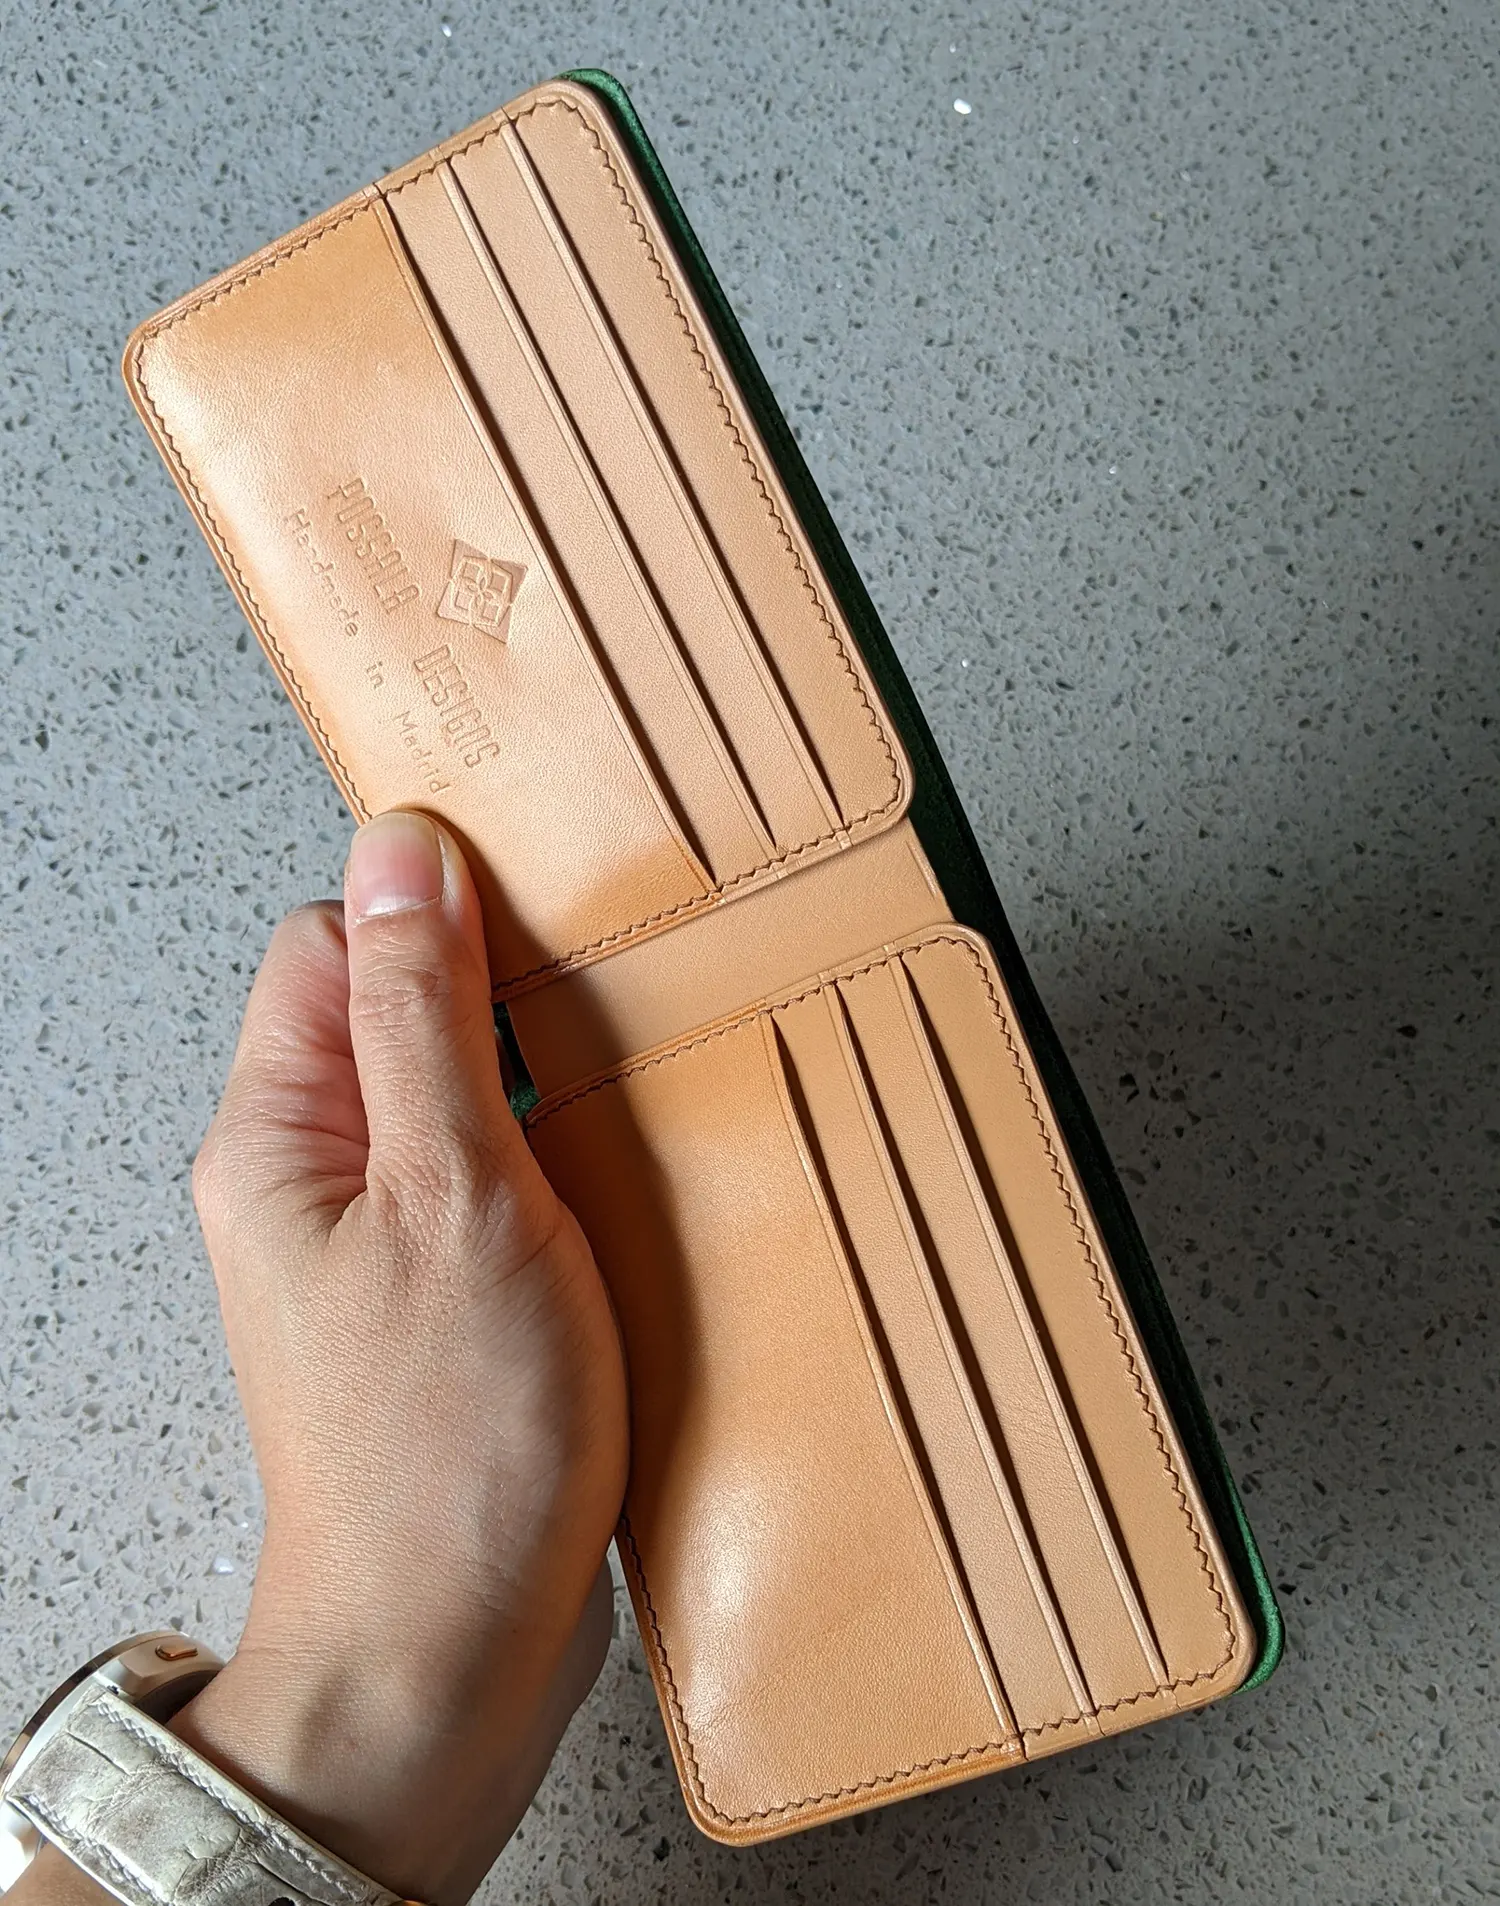 possala designs natural bifold leather wallet